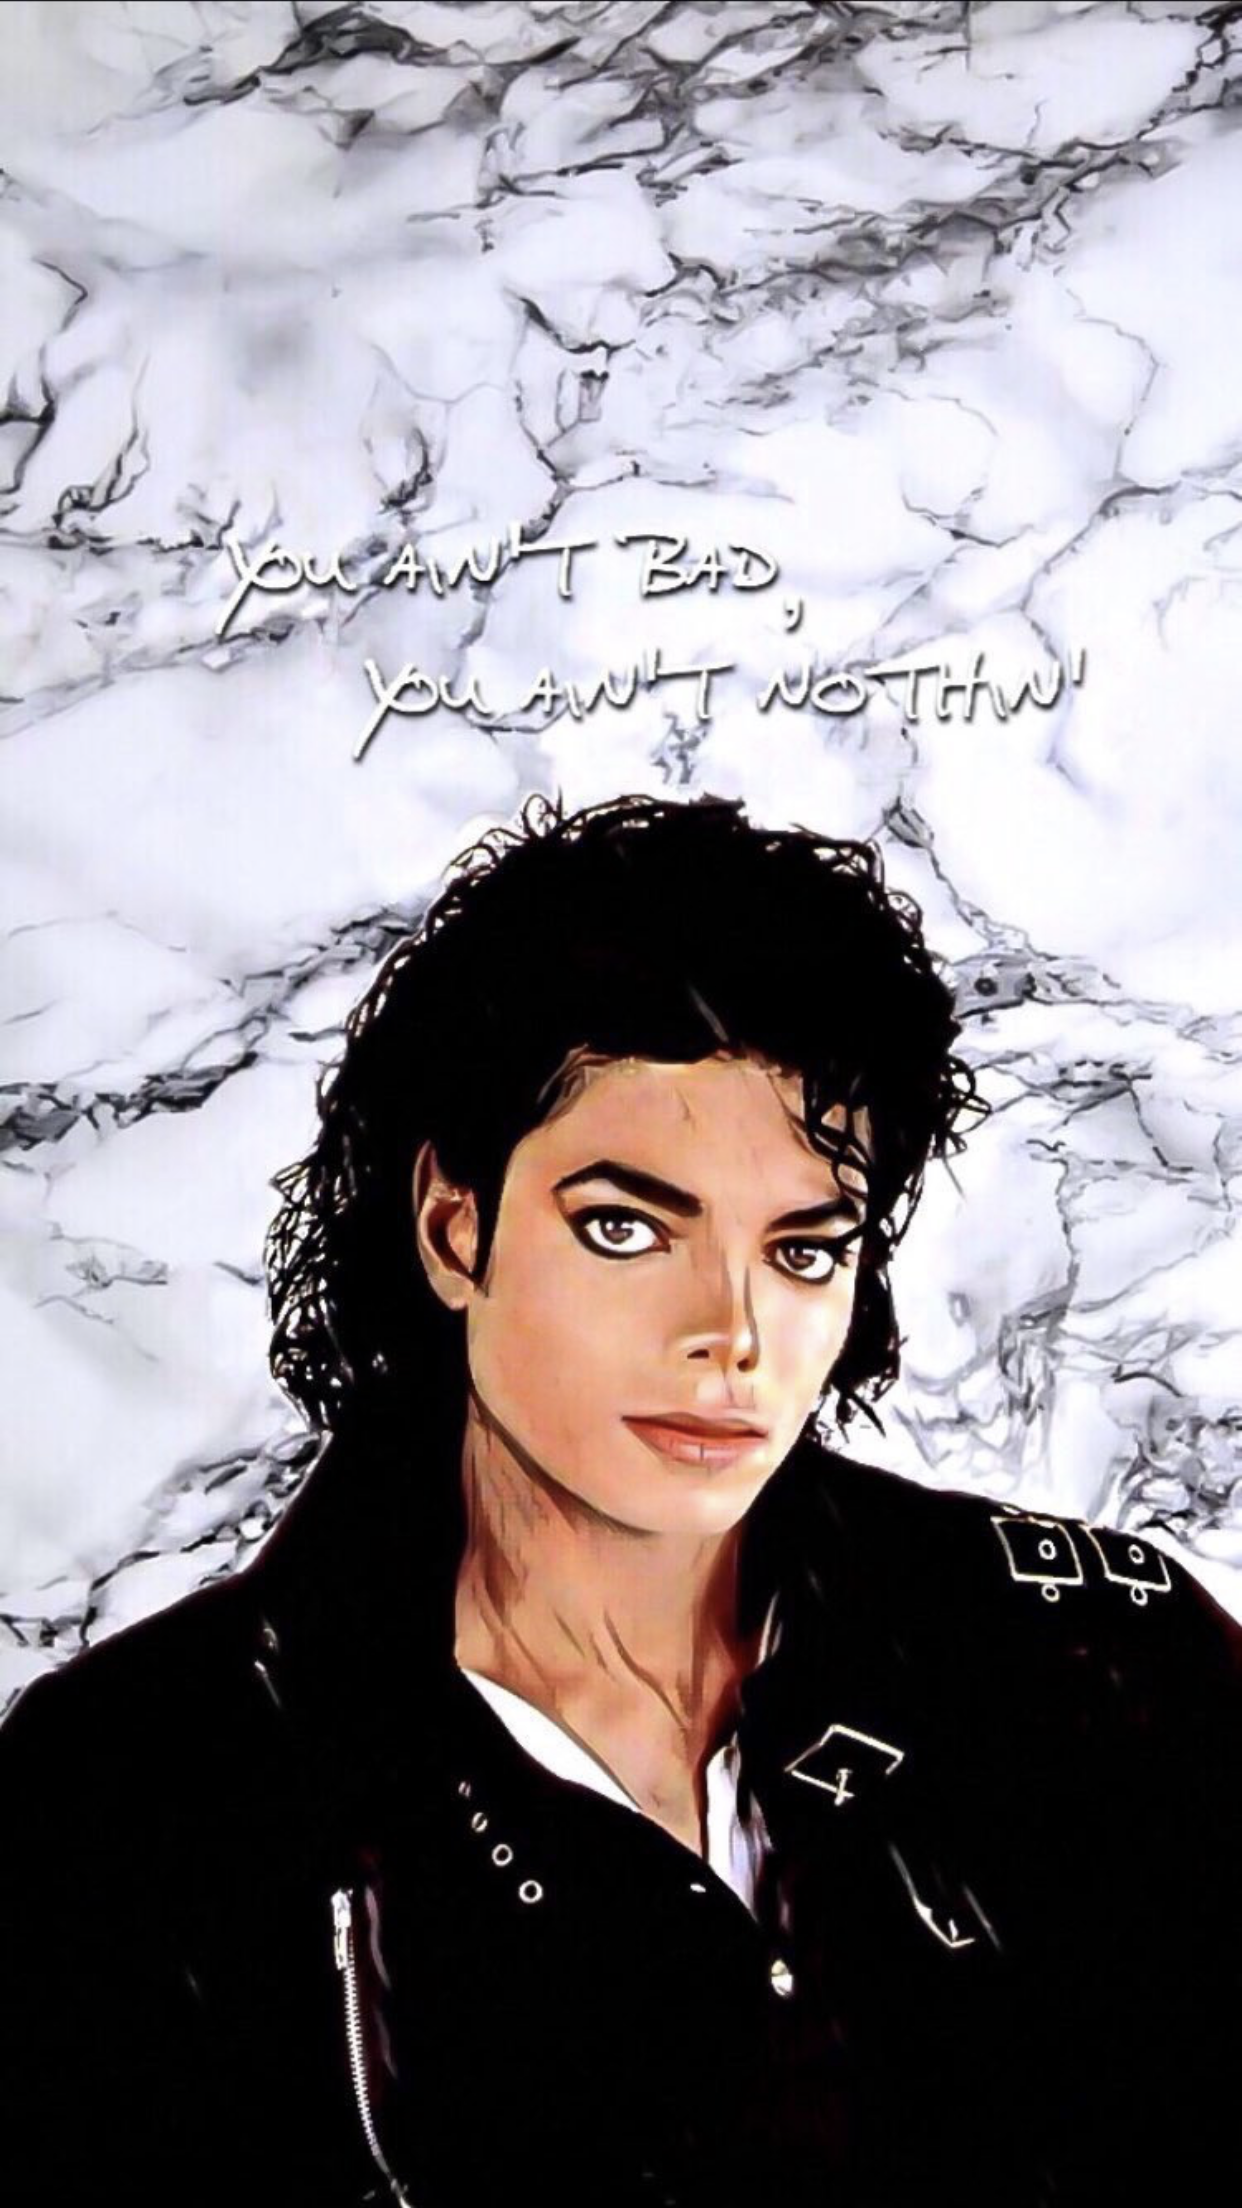 Bad Wallpaper. Michael Jackson